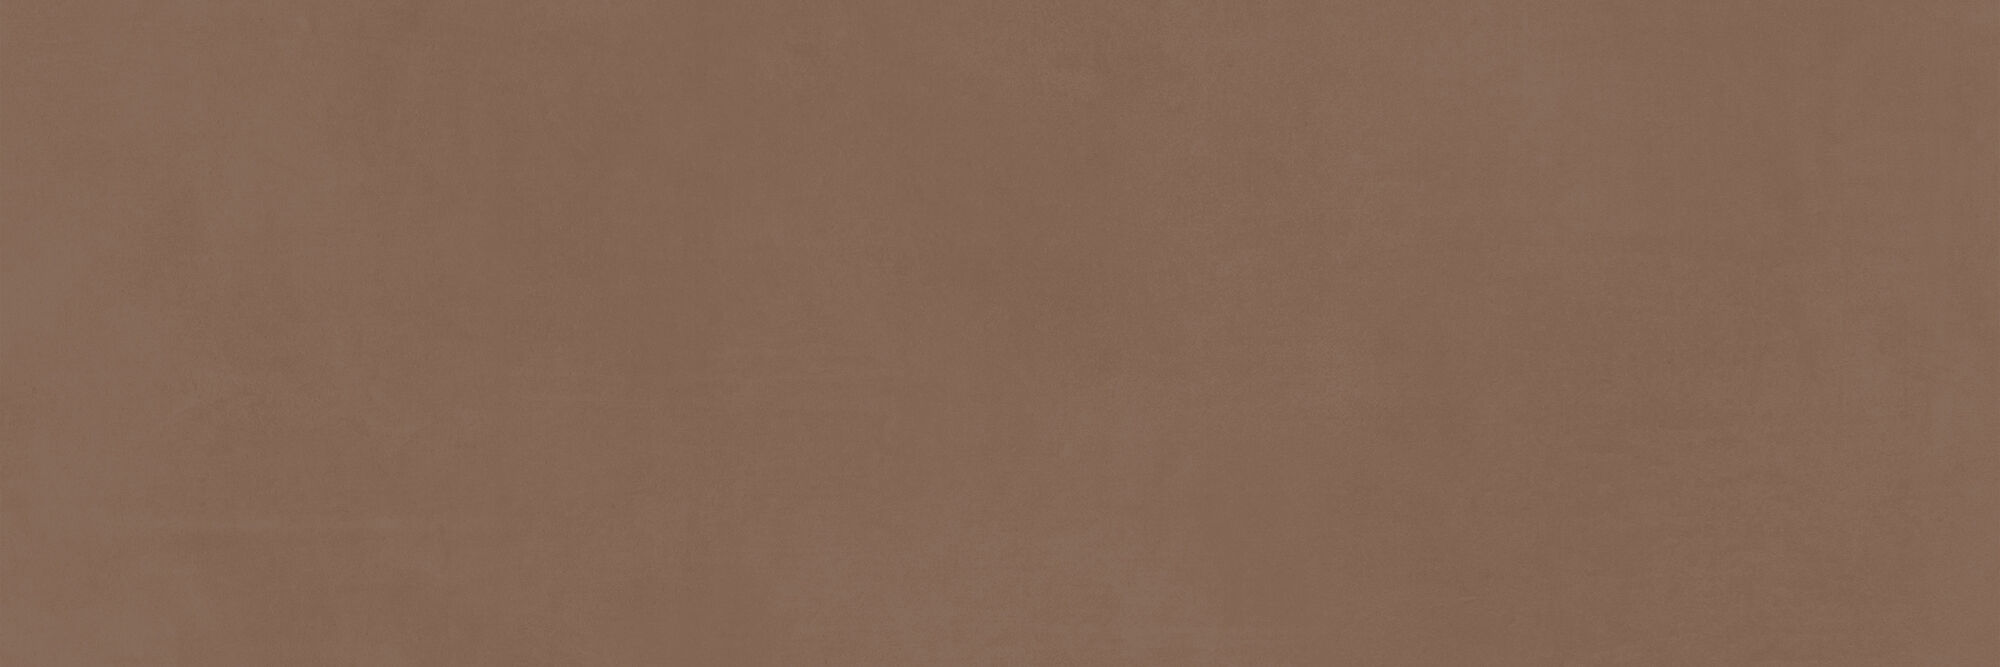 Плитка Meissen Keramik Fragmenti коричневый 25x75 A16500 3